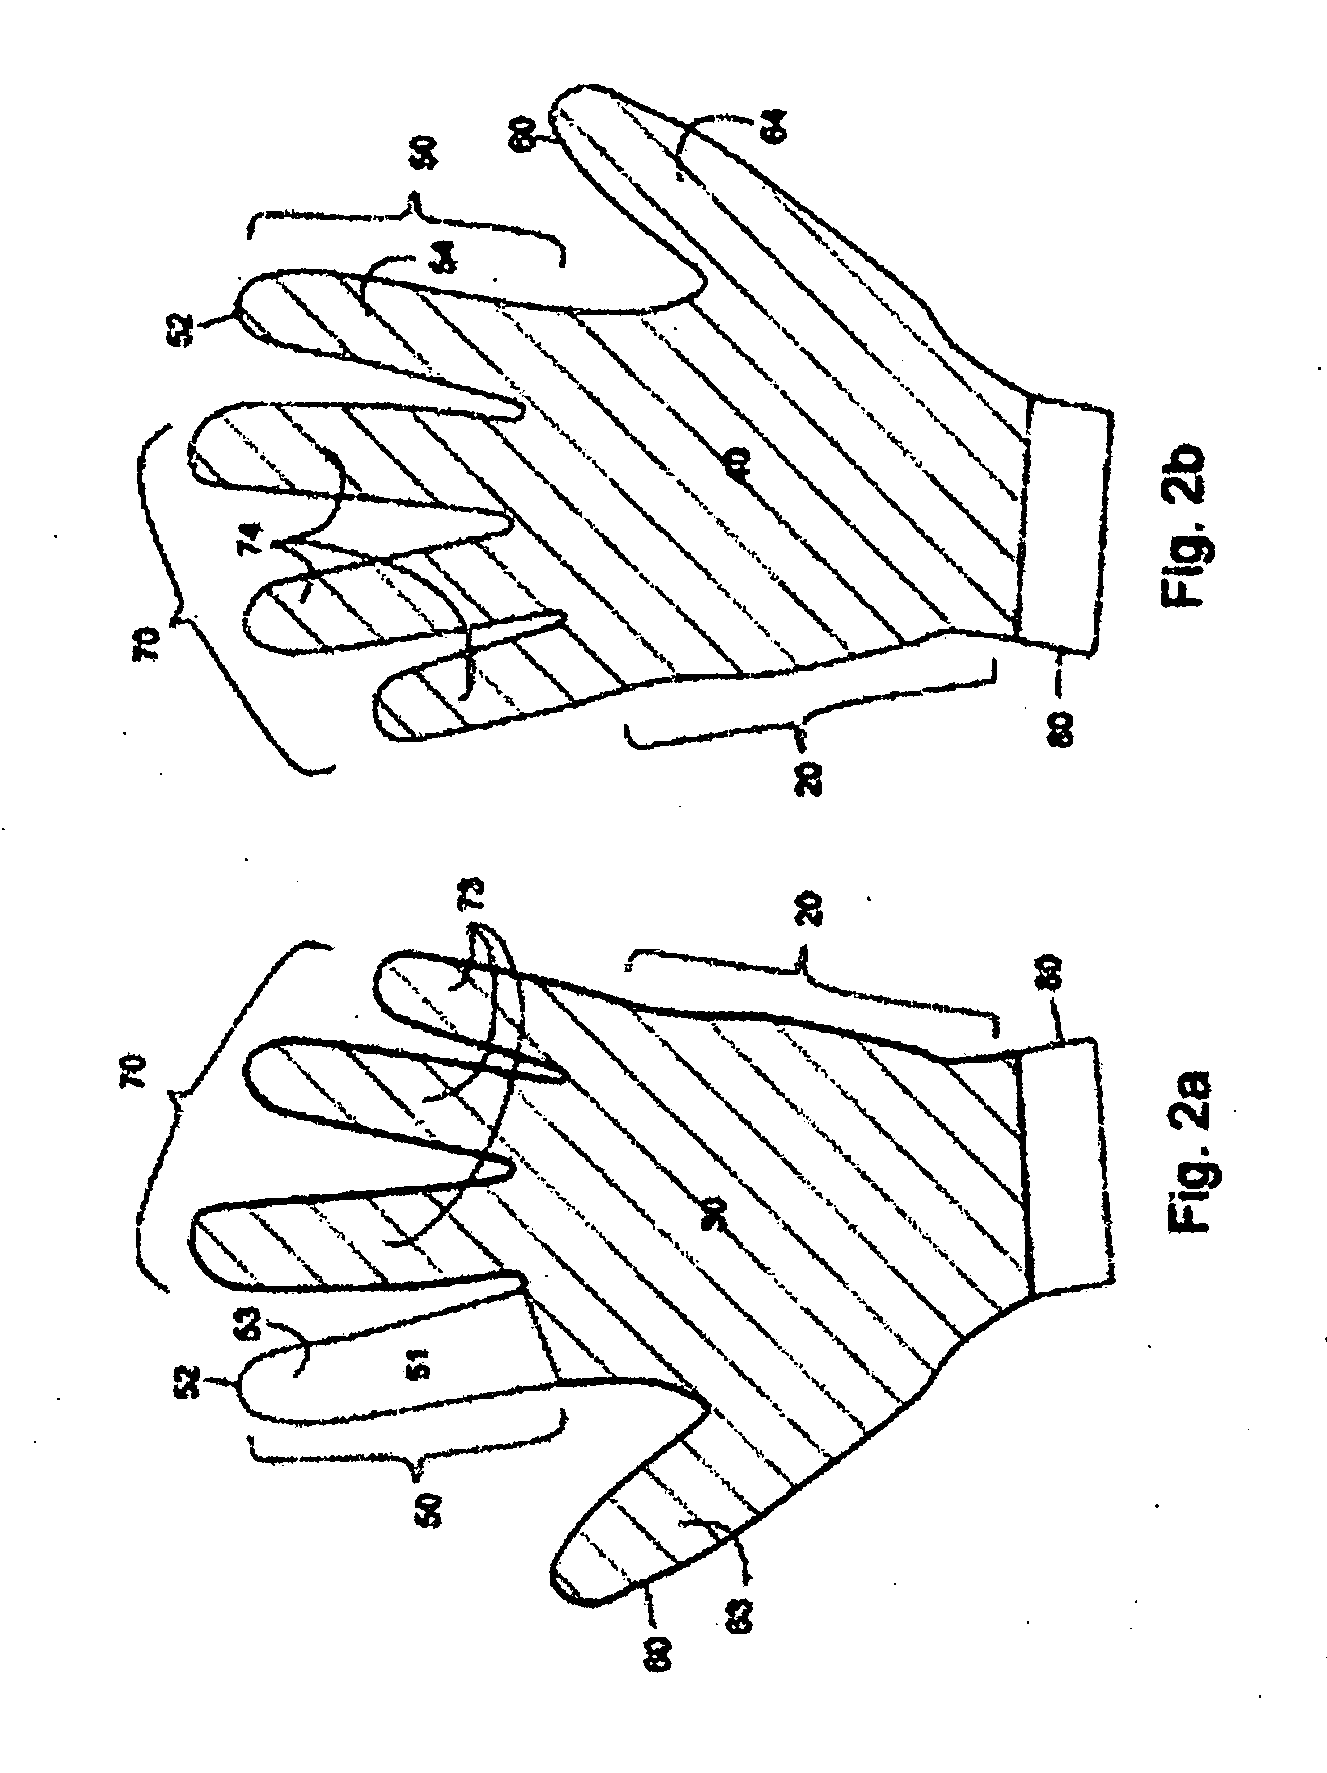 Endoscopy glove